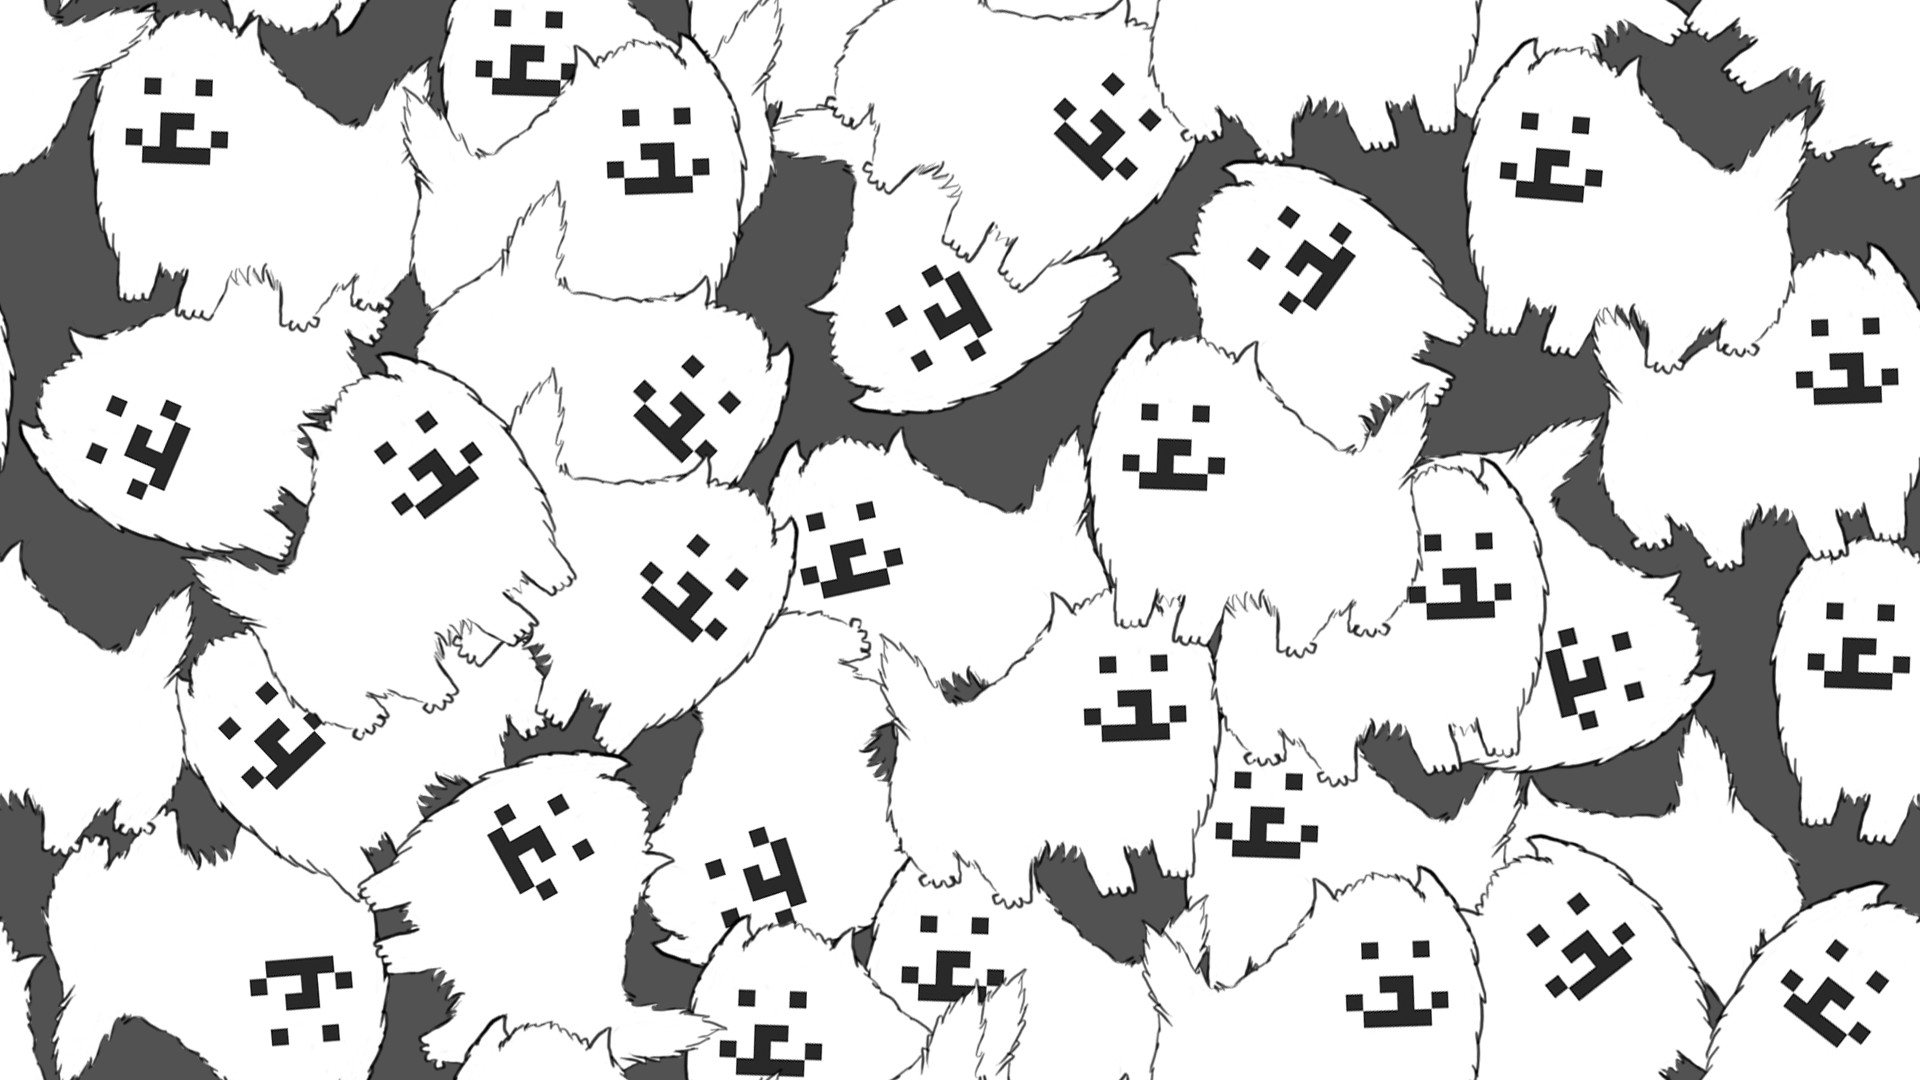 Tile-able dog wallpaper I made …